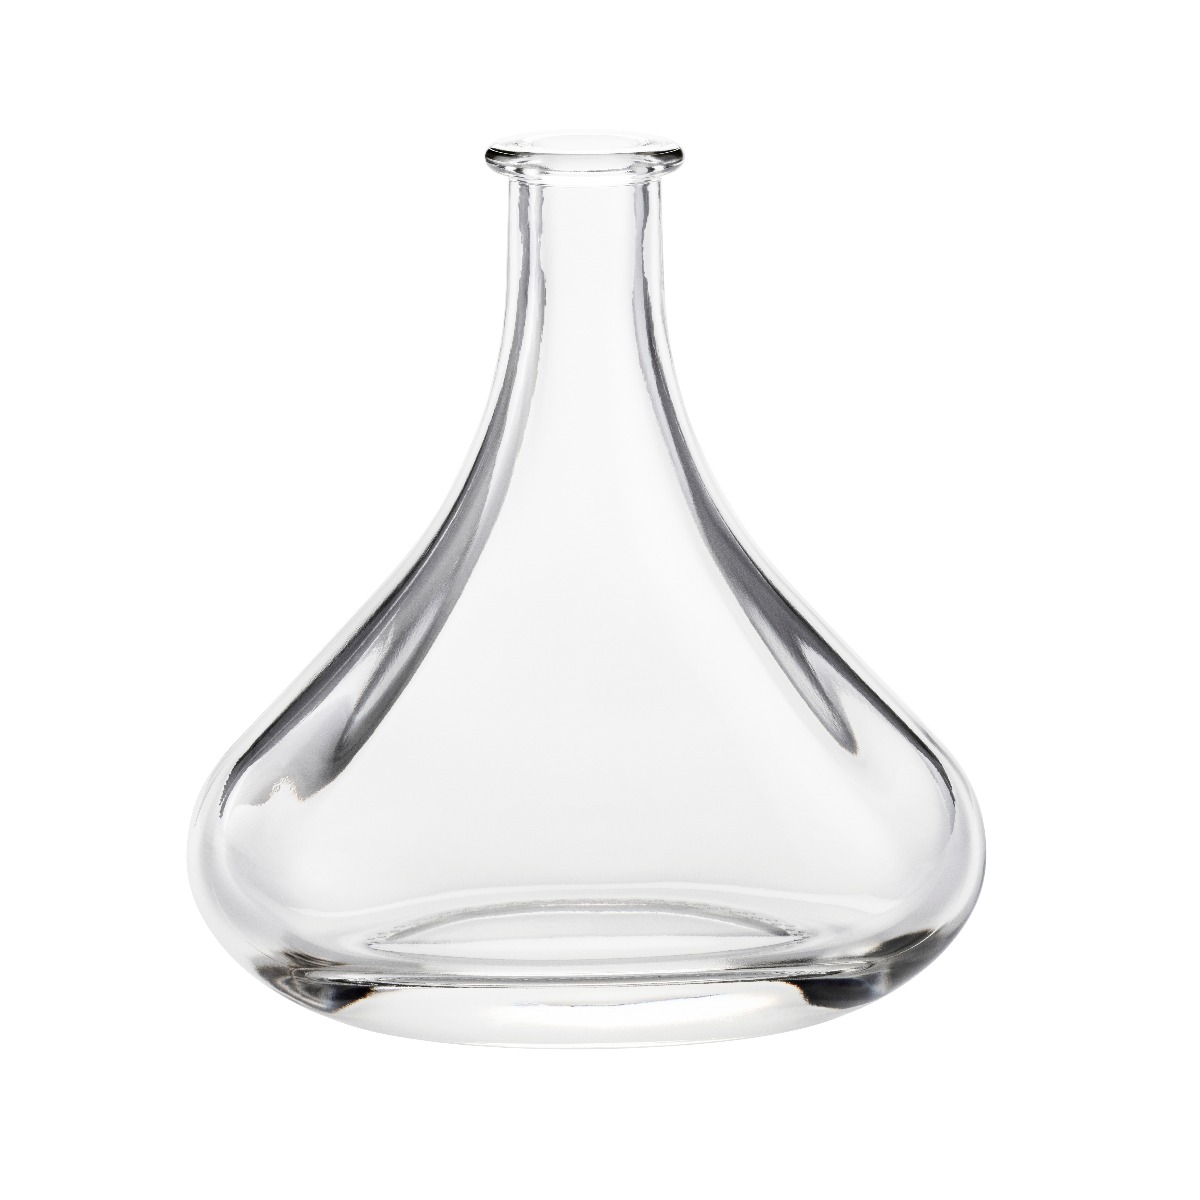 Wide bottom glass vase